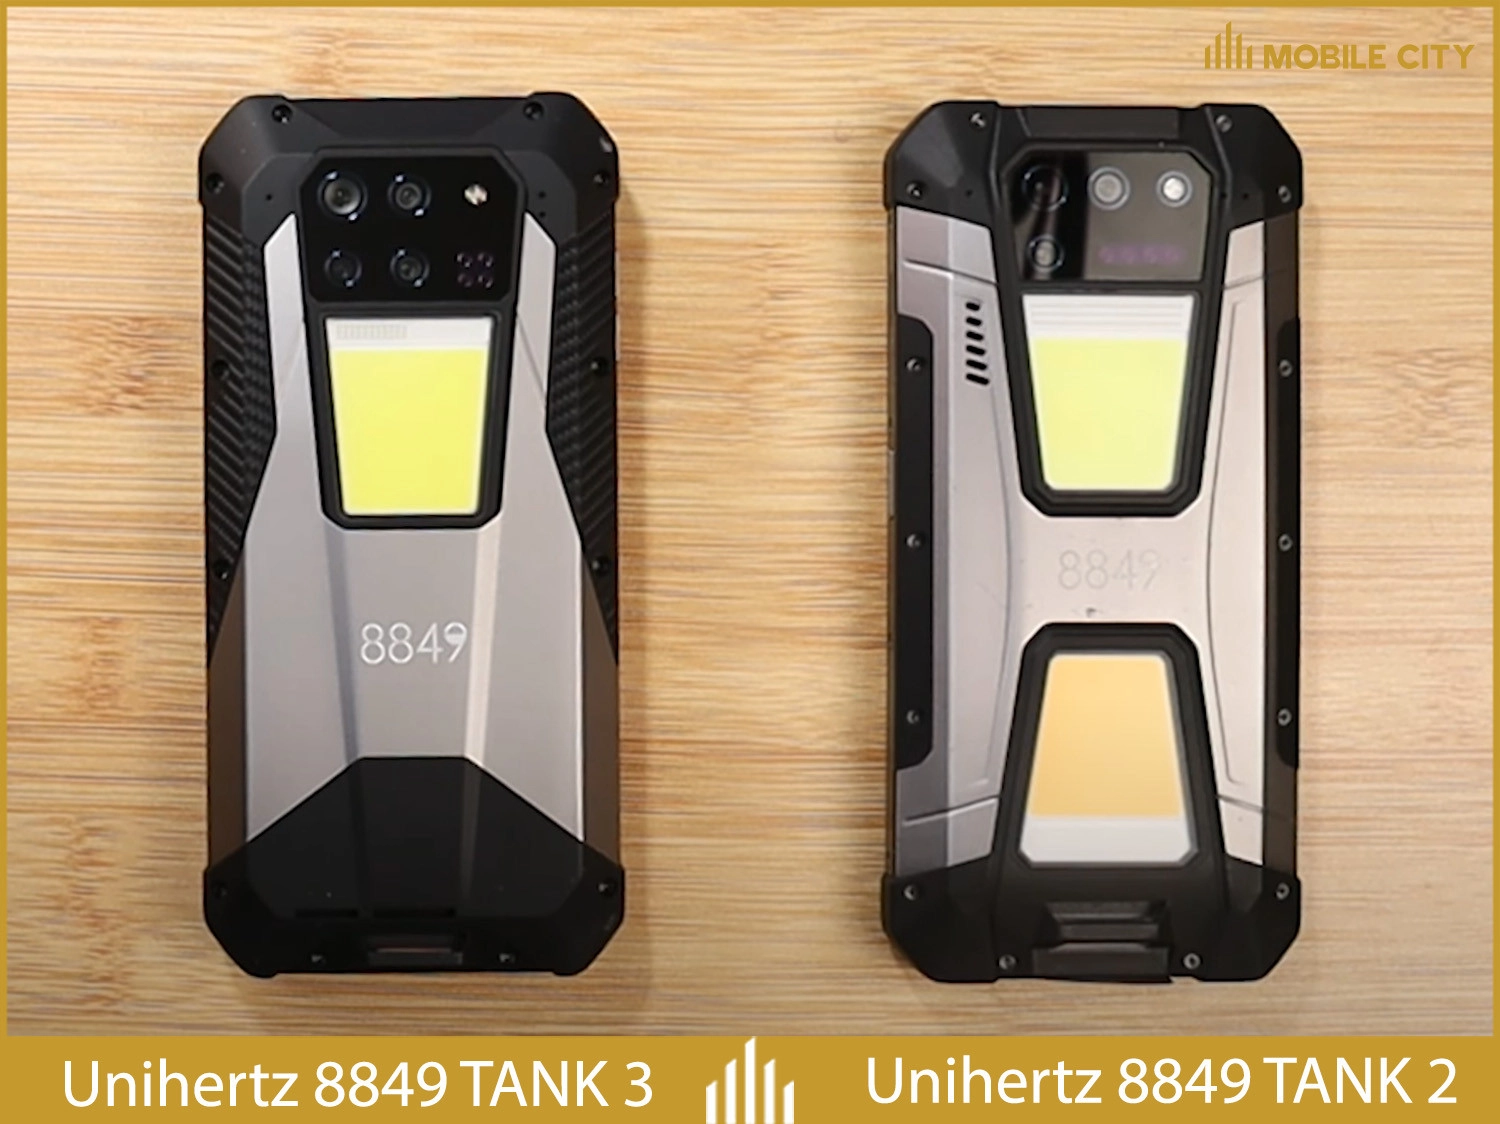 unihertz-8849-tank-3-so-sanh-tank-2-01